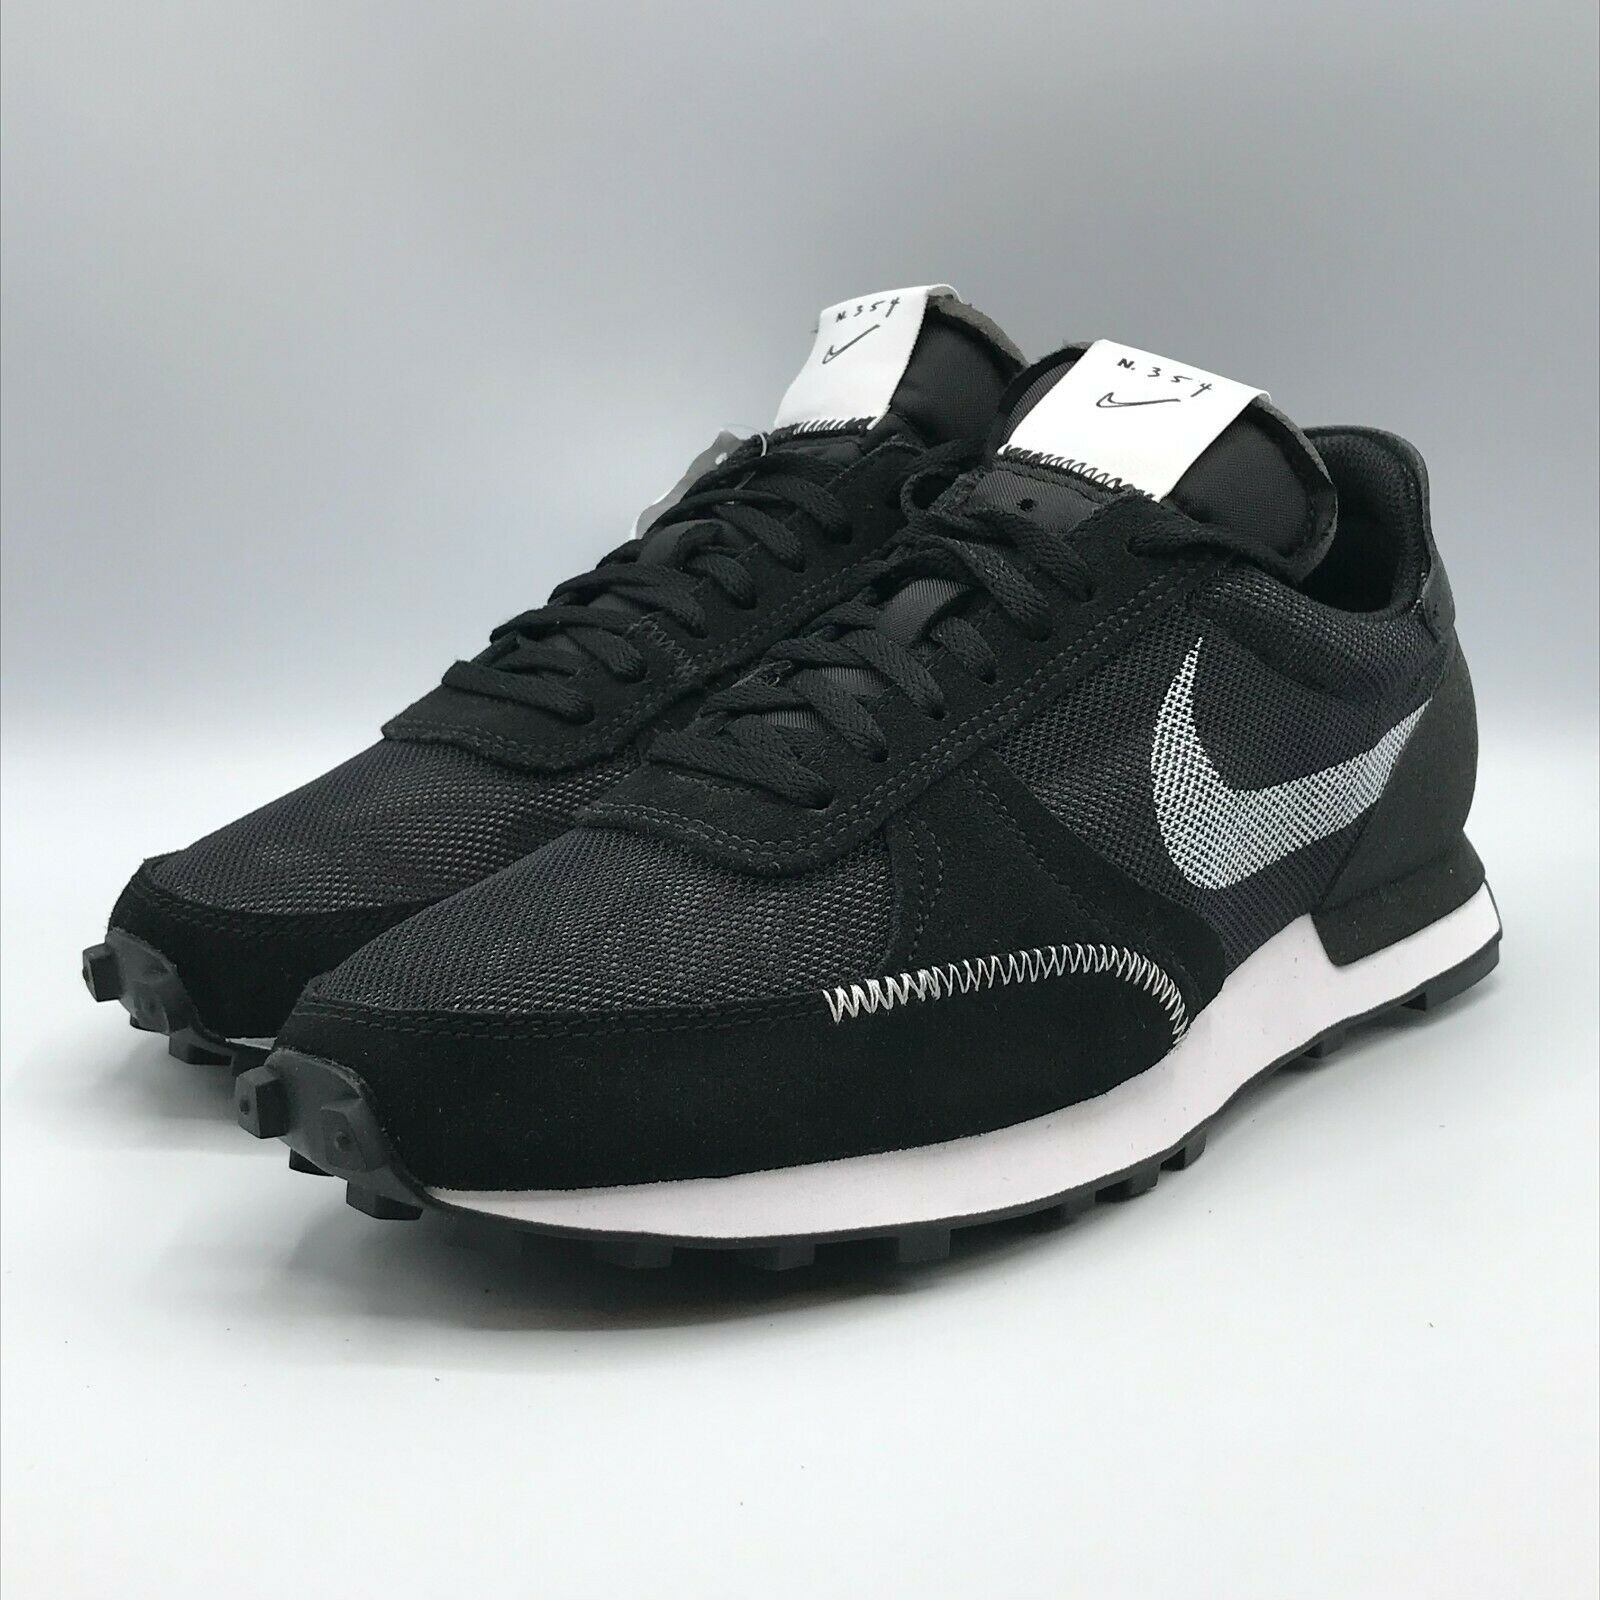 Nike Mens Size 9 Daybreak DBreak Type Black White Sneakers Shoes New CJ1156-003